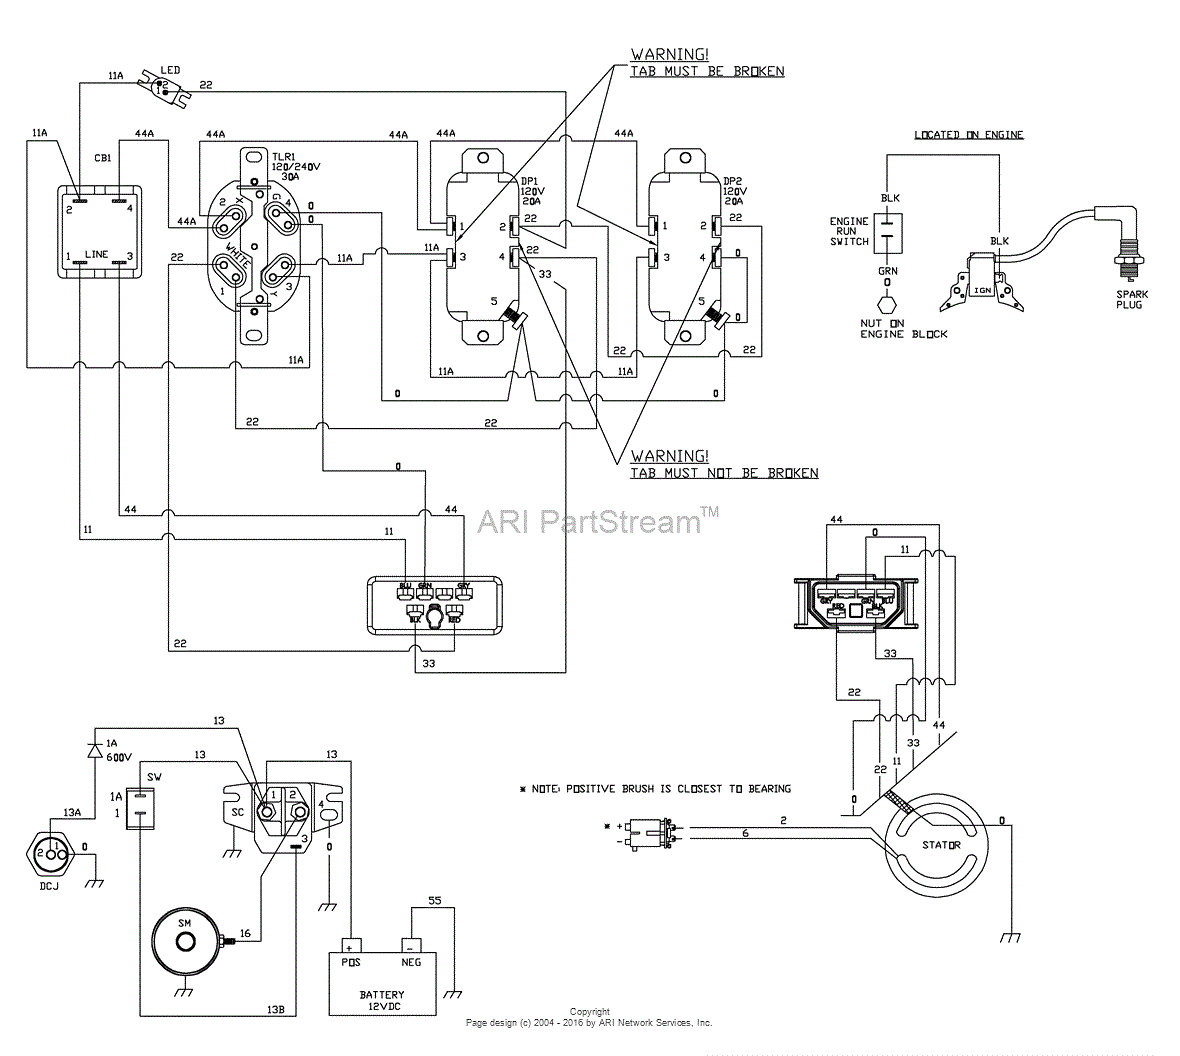 [DIAGRAM] Generac Portable Generator Wiring Diagnostic Overview Part